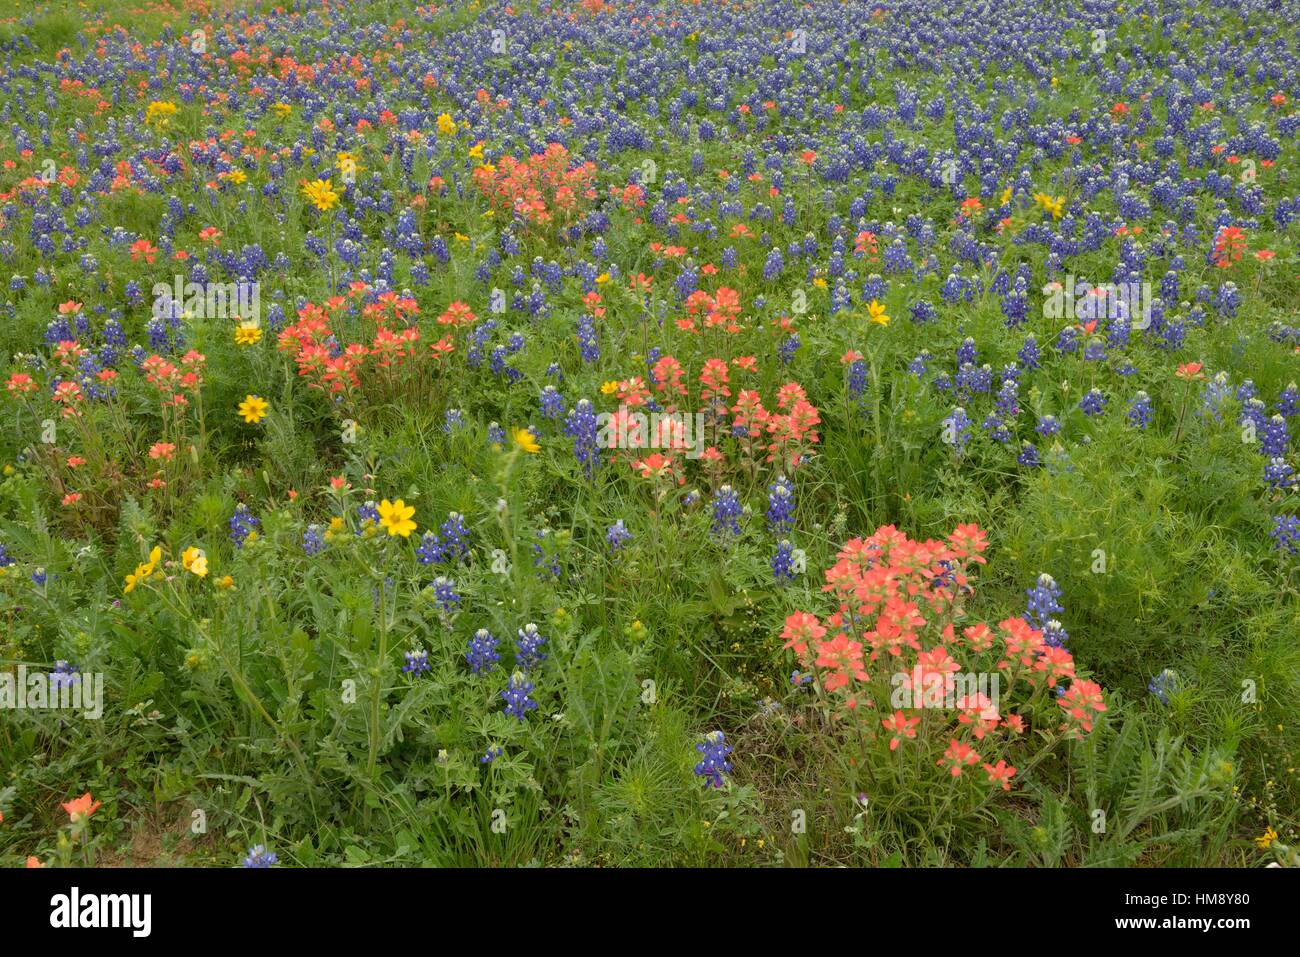 A field with flowering Texas bluebonnet (Lupinus subcarnosus) and Texas paintbrush (Castilleja indivisa), Johnson City, Texas, USA. Stock Photo